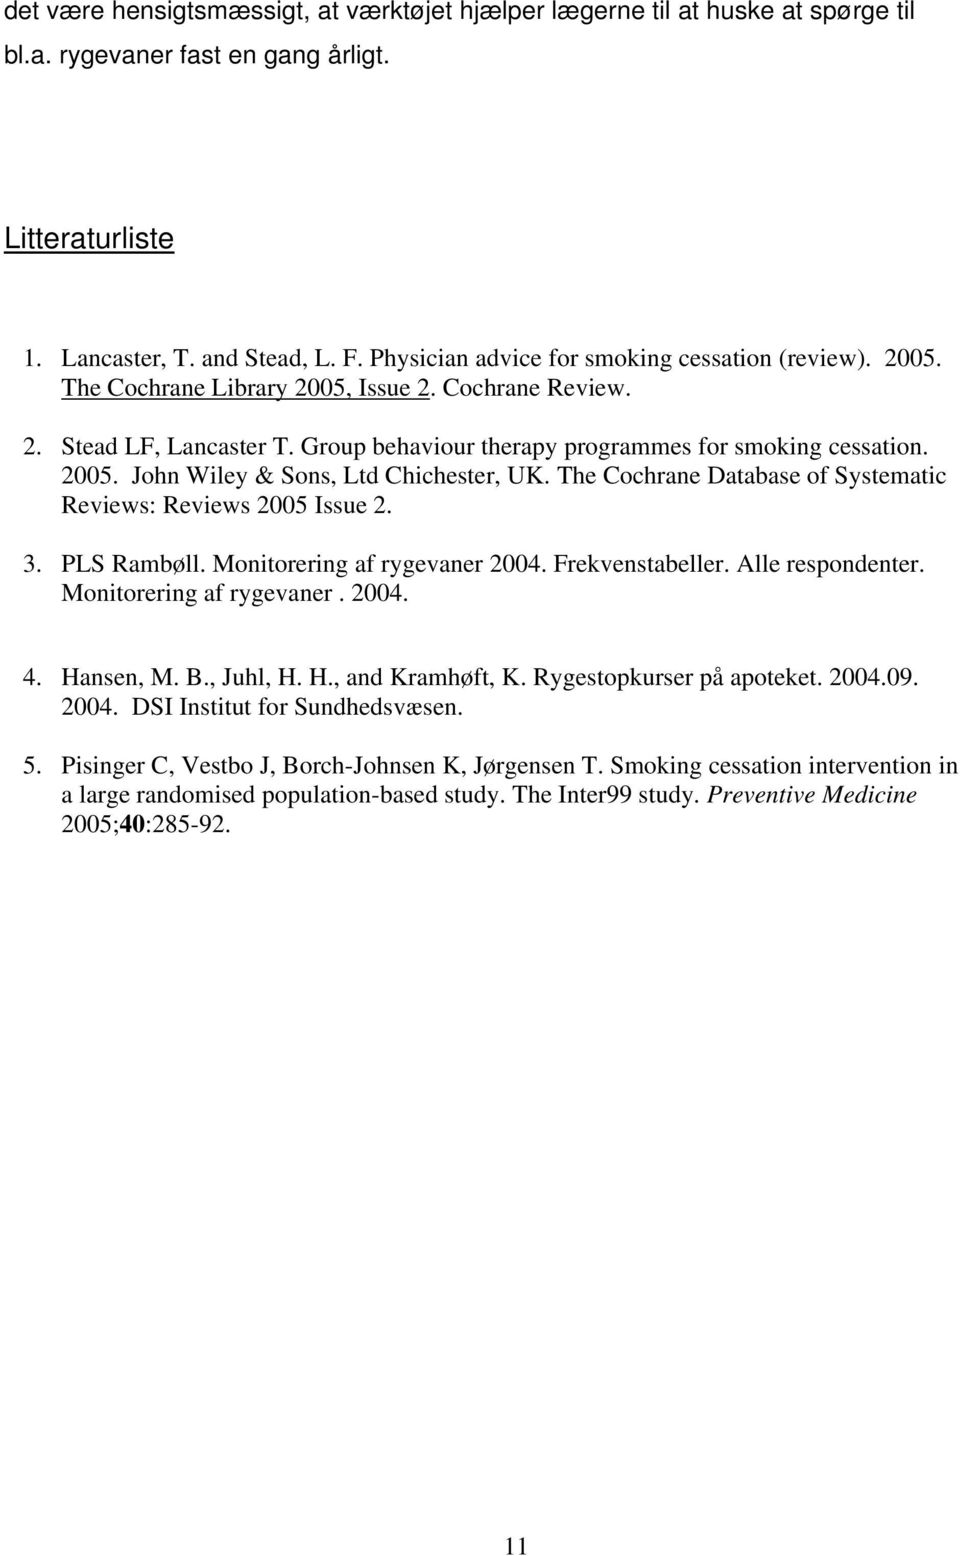 The Cochrane Database of Systematic Reviews: Reviews 2005 Issue 2. 3. PLS Rambøll. Monitorering af rygevaner 2004. Frekvenstabeller. Alle respondenter. Monitorering af rygevaner. 2004. 4. Hansen, M.